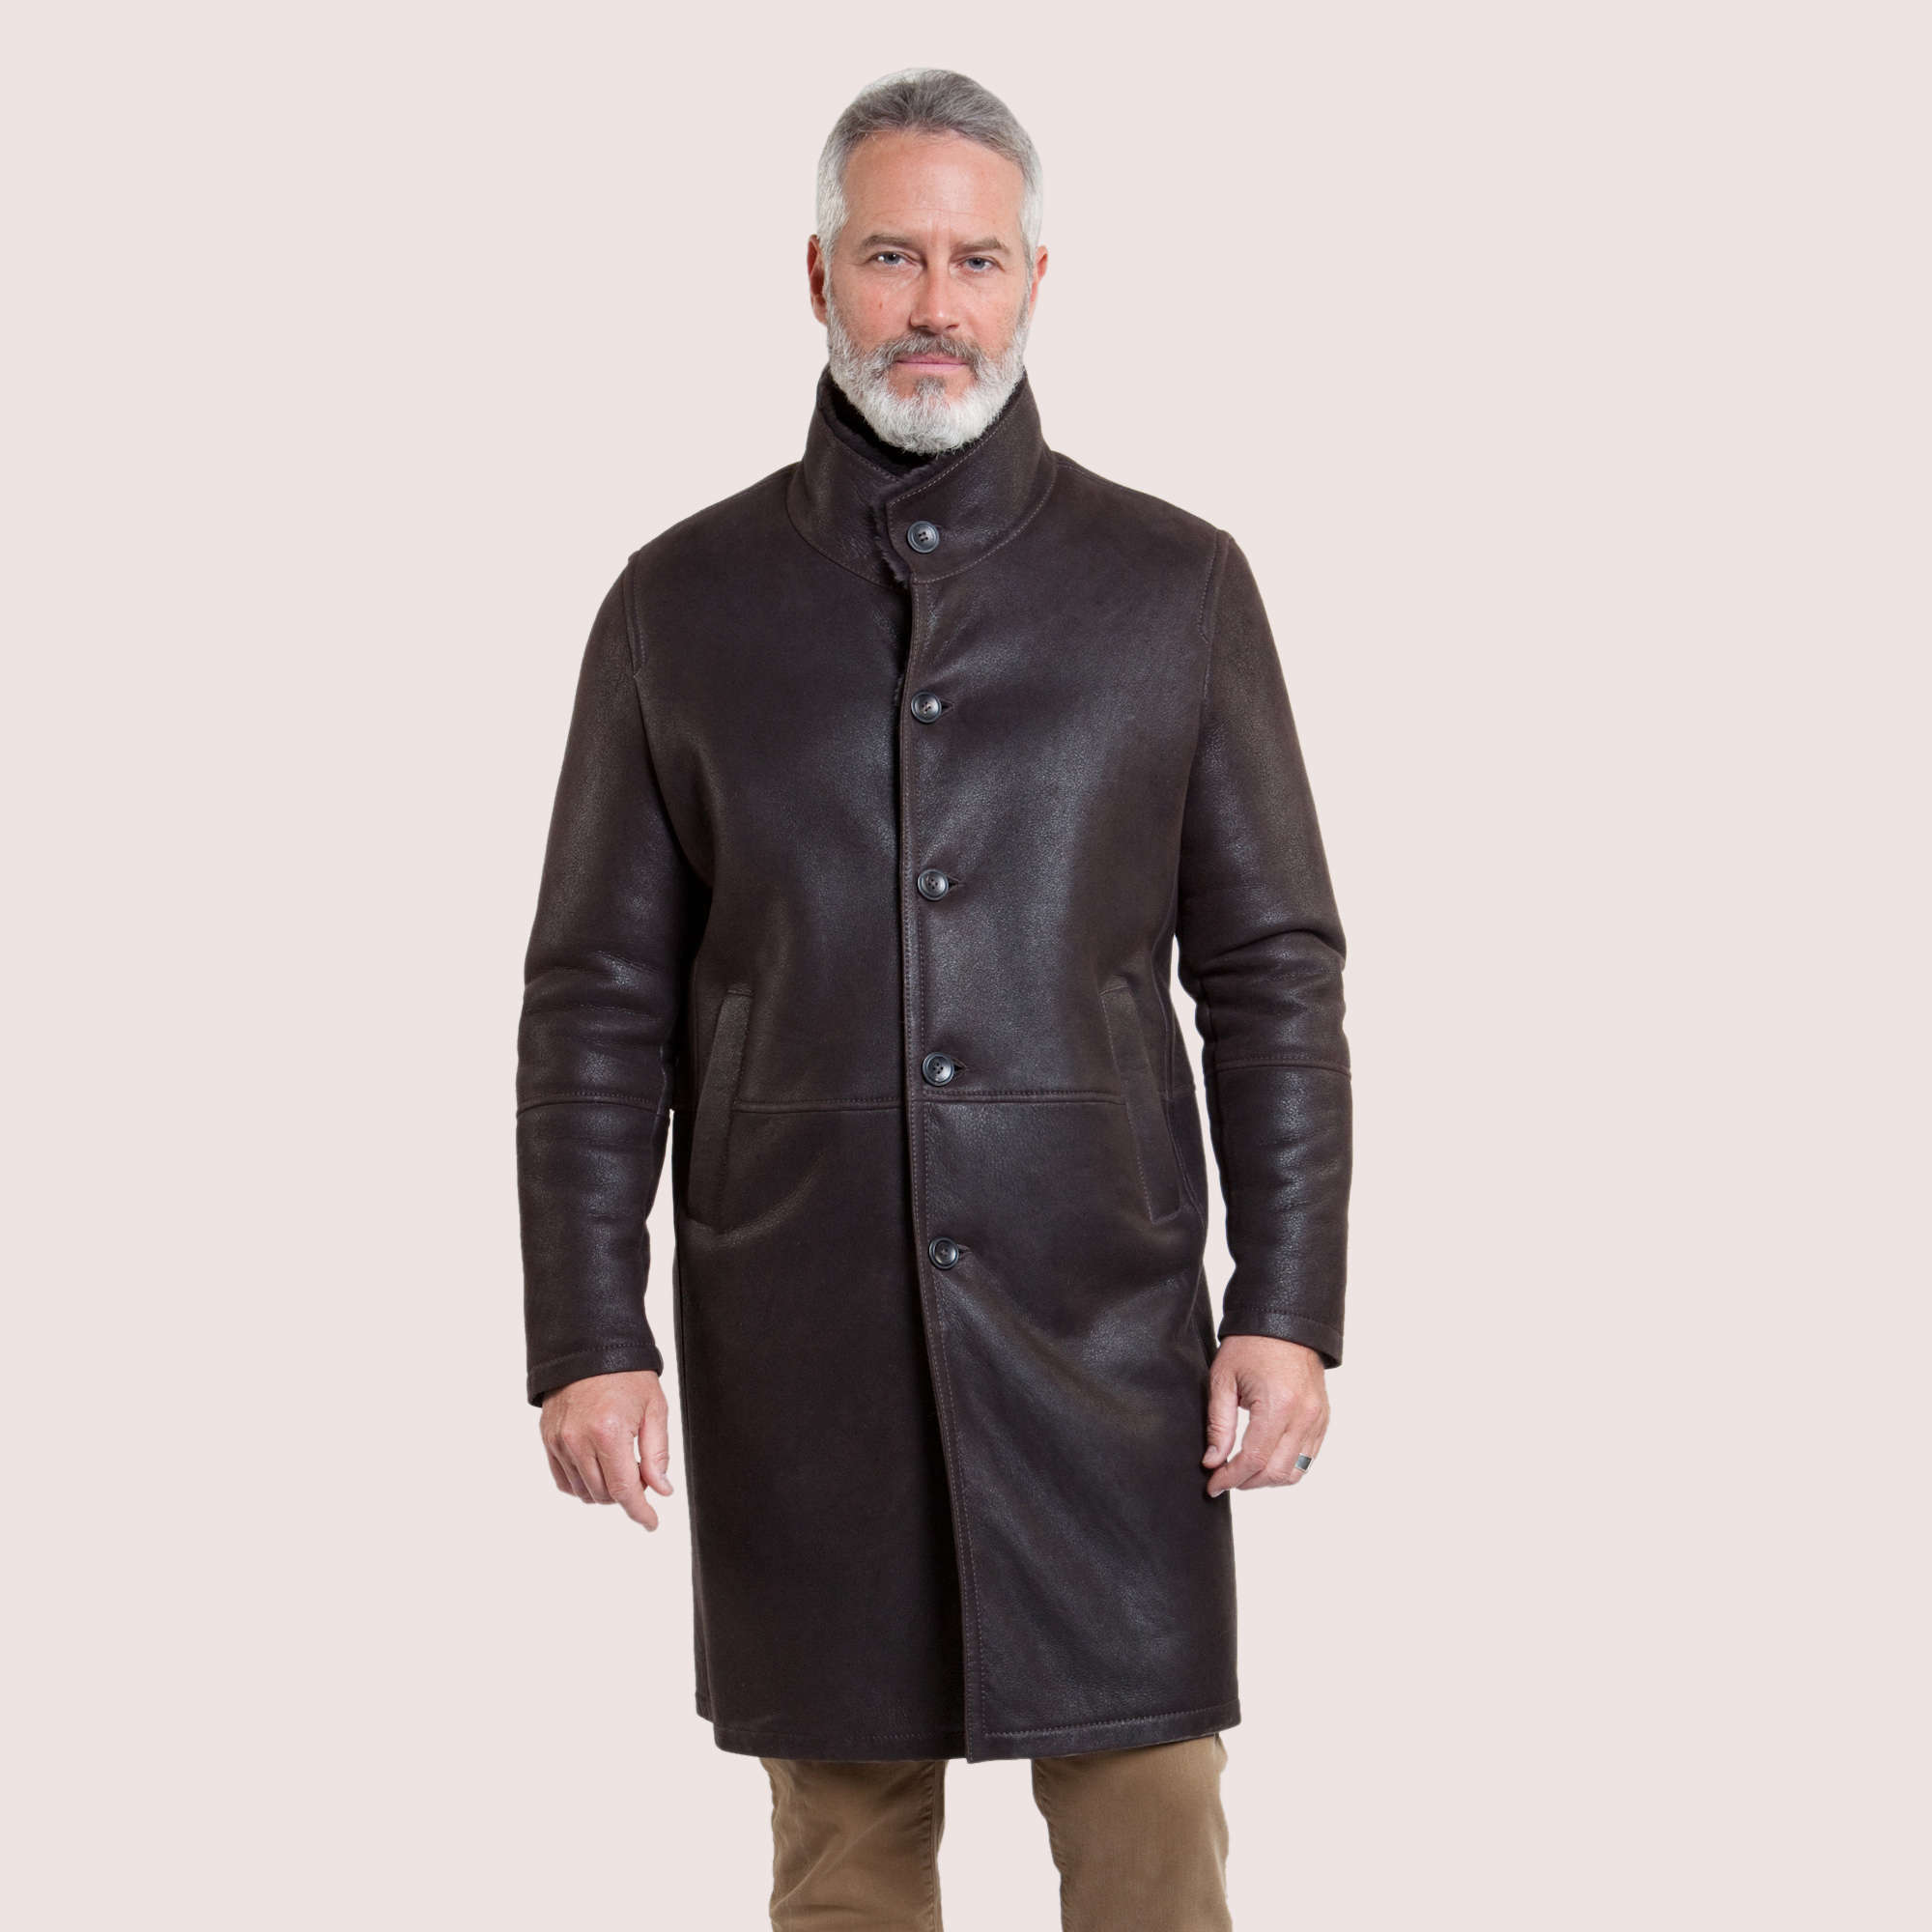 Aston Leather | Newburgh Shearling Coat